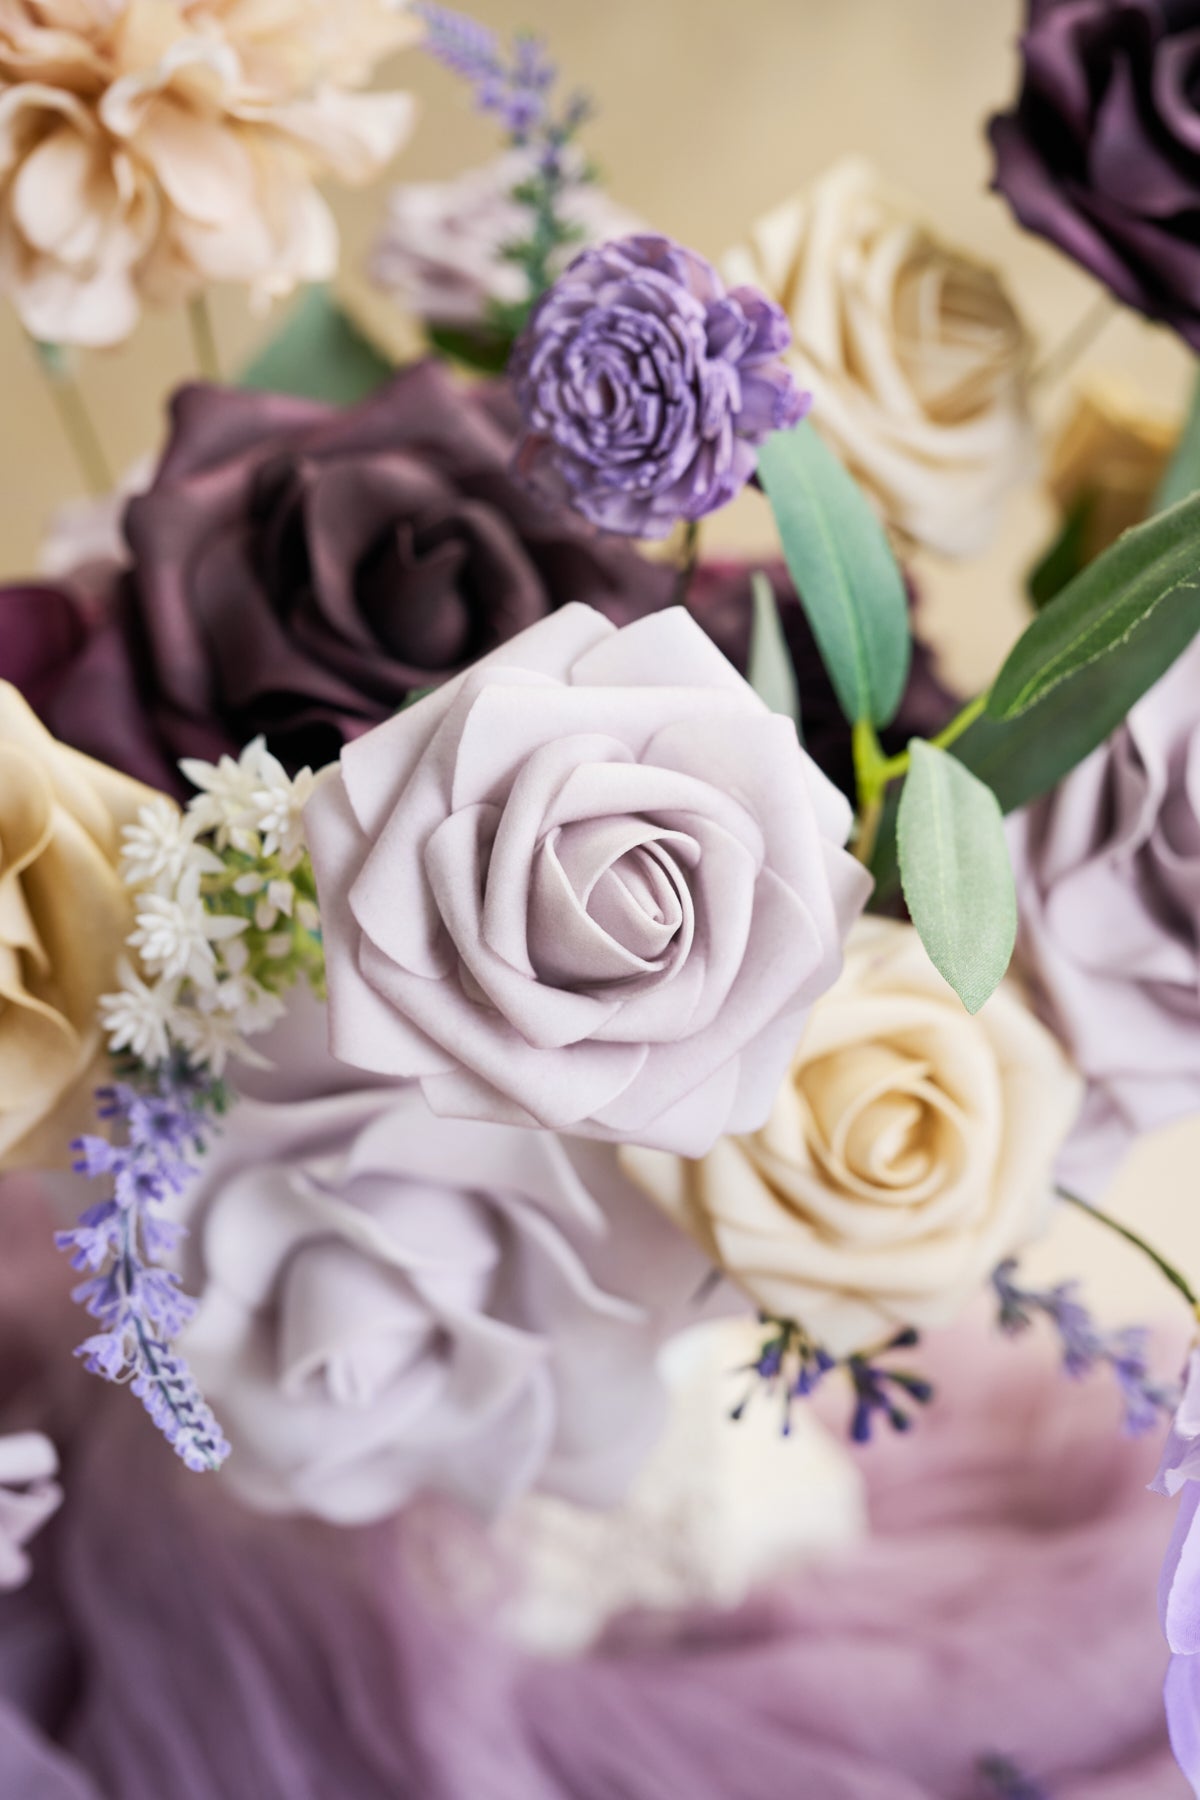 DIY Designer Flower Box in French Lavender & Plum